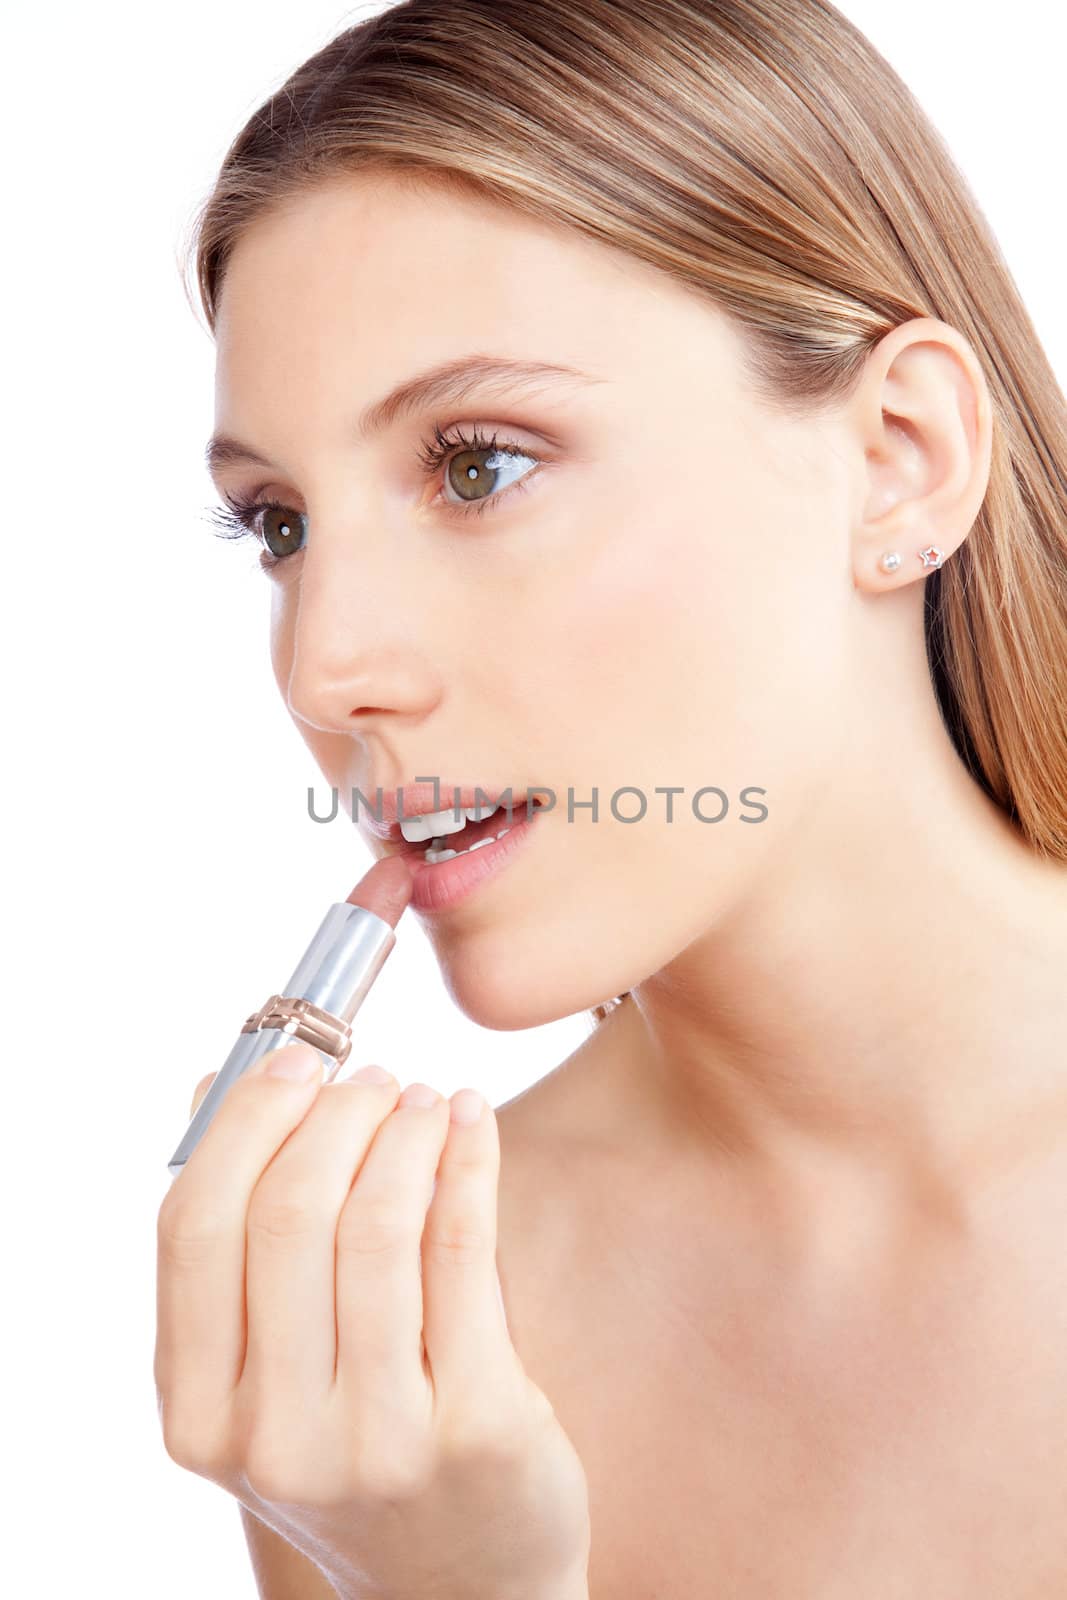 Beautiful woman applying lipstick on lips, isolated on white background.